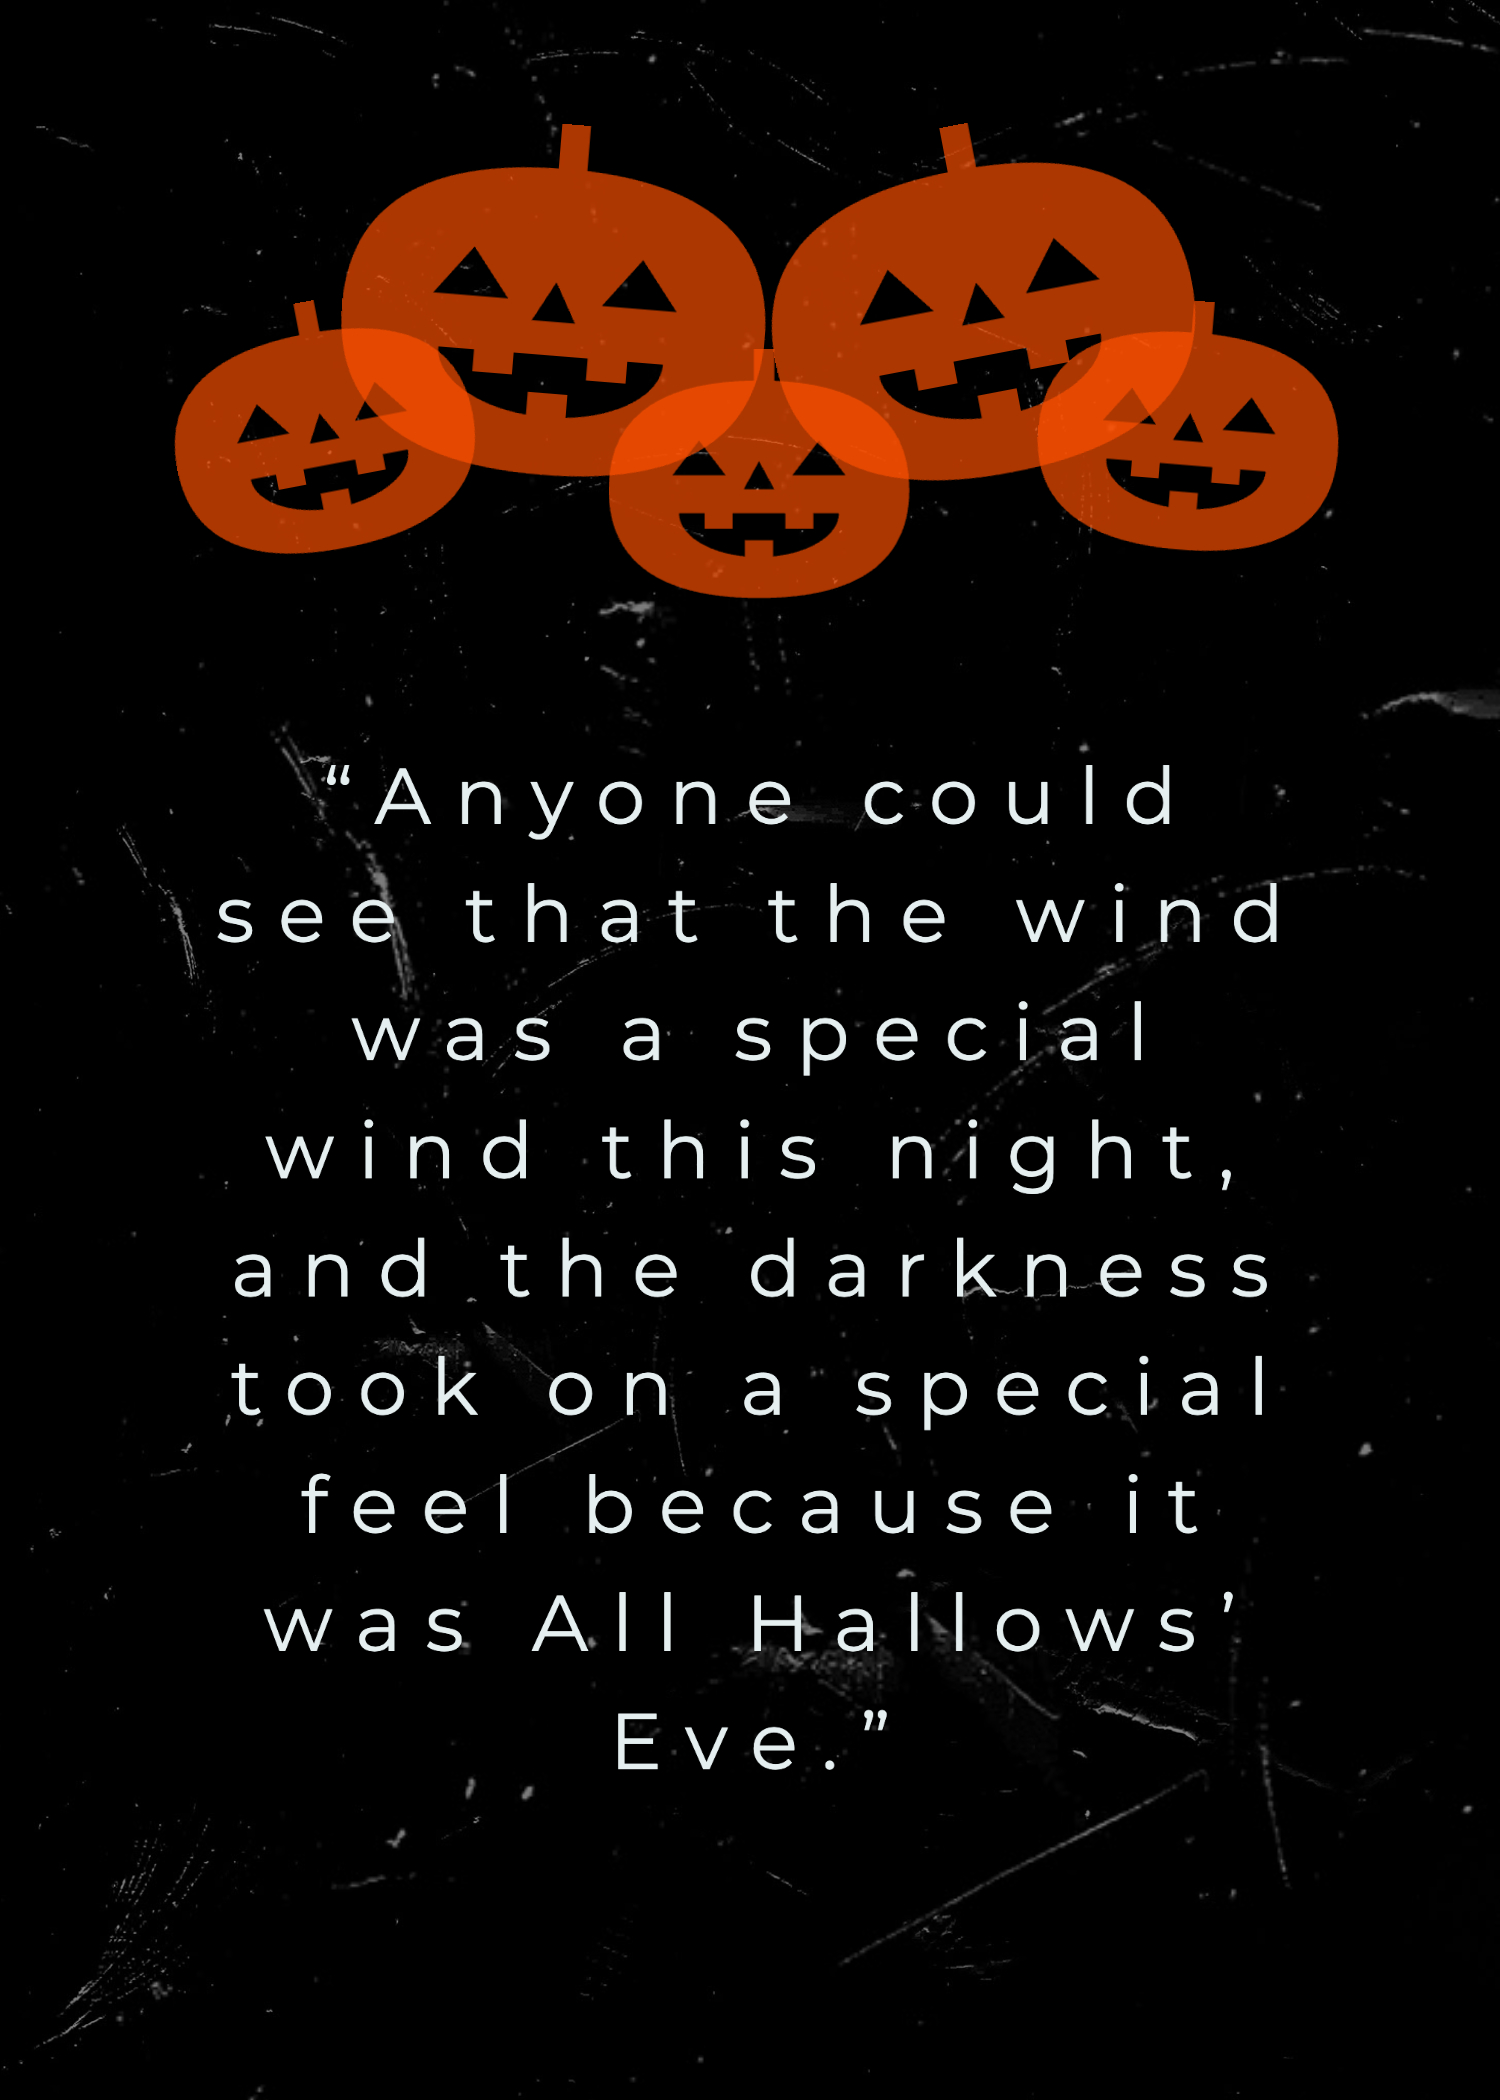 31 Great Halloween Quotes That Aren't Too Spooky